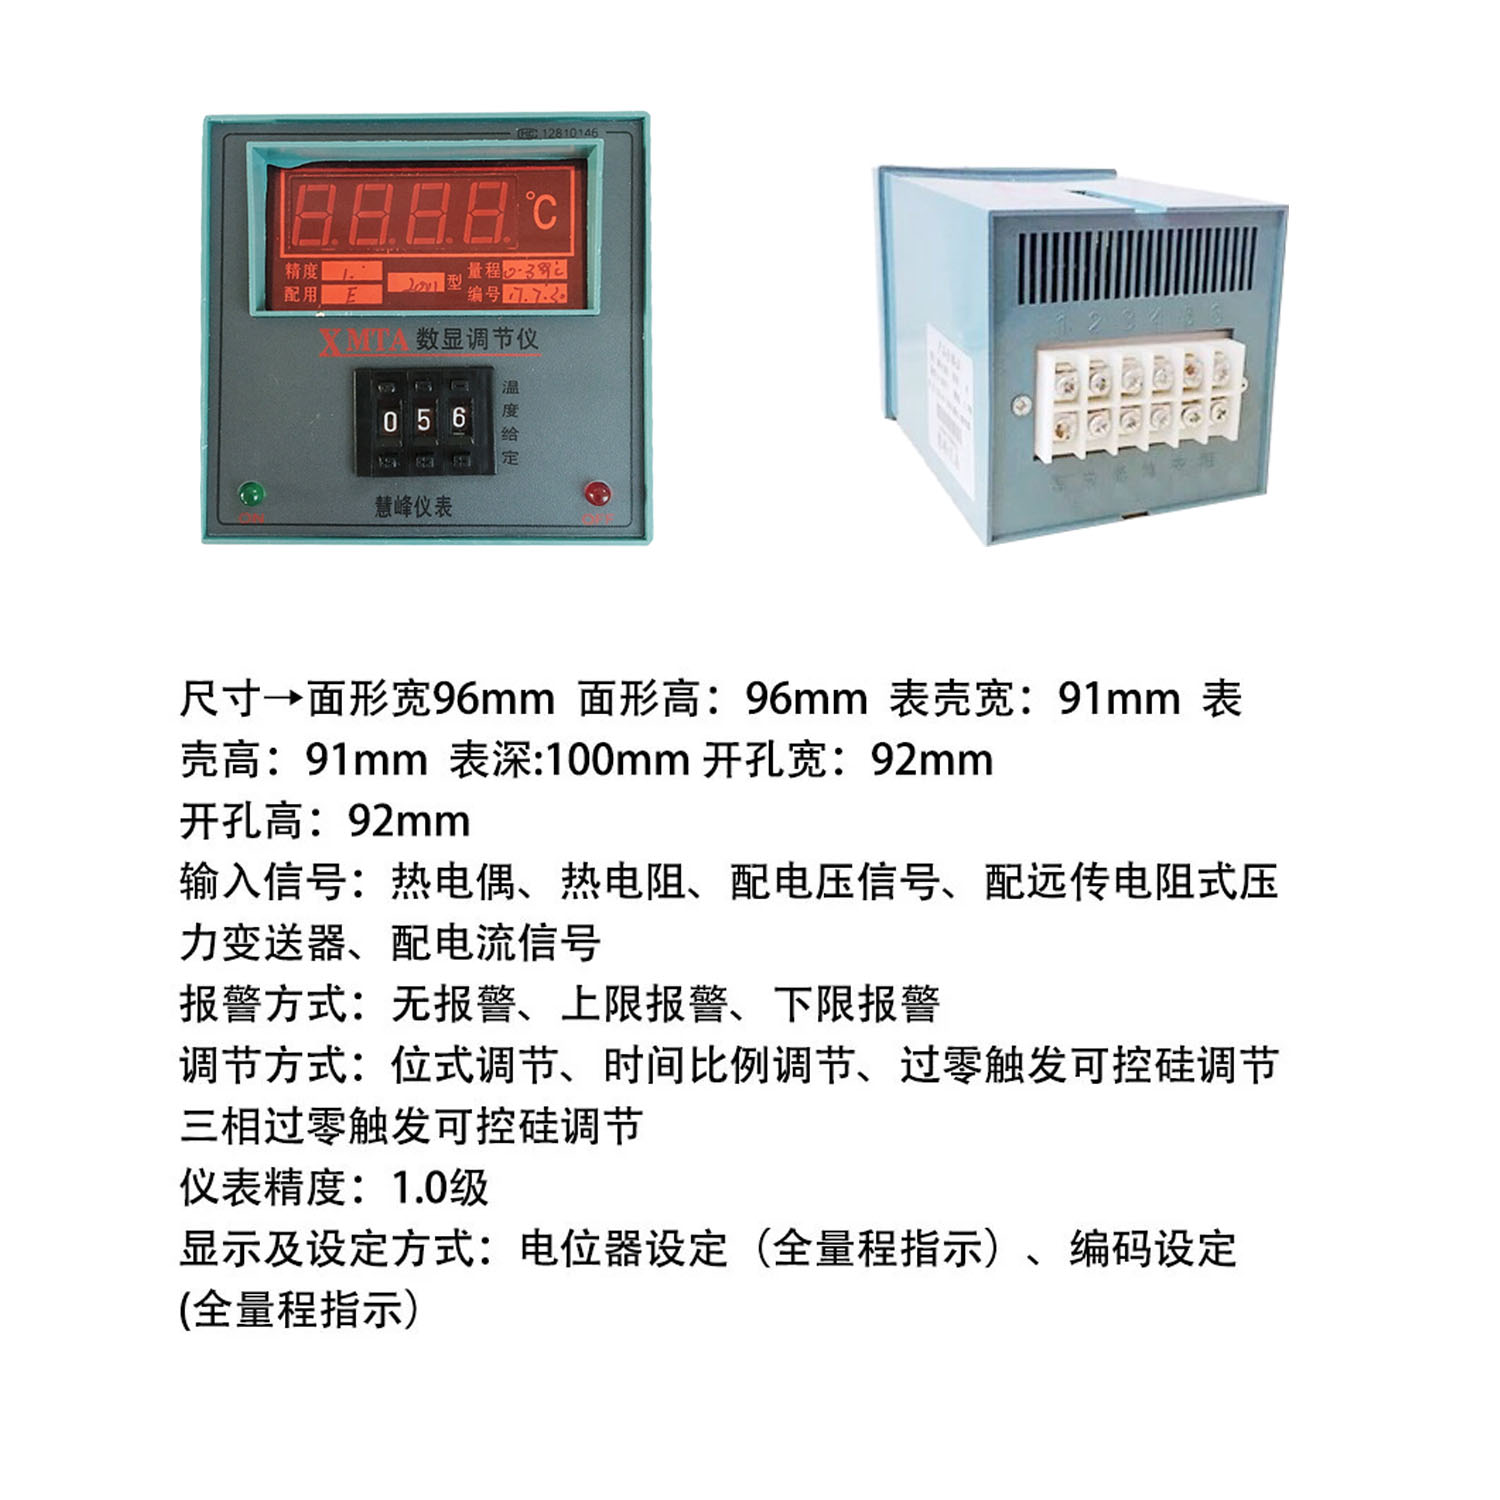 XMTA/XMTD-2001 2002 3001 3002数显调节仪 温度控制器 温控仪表